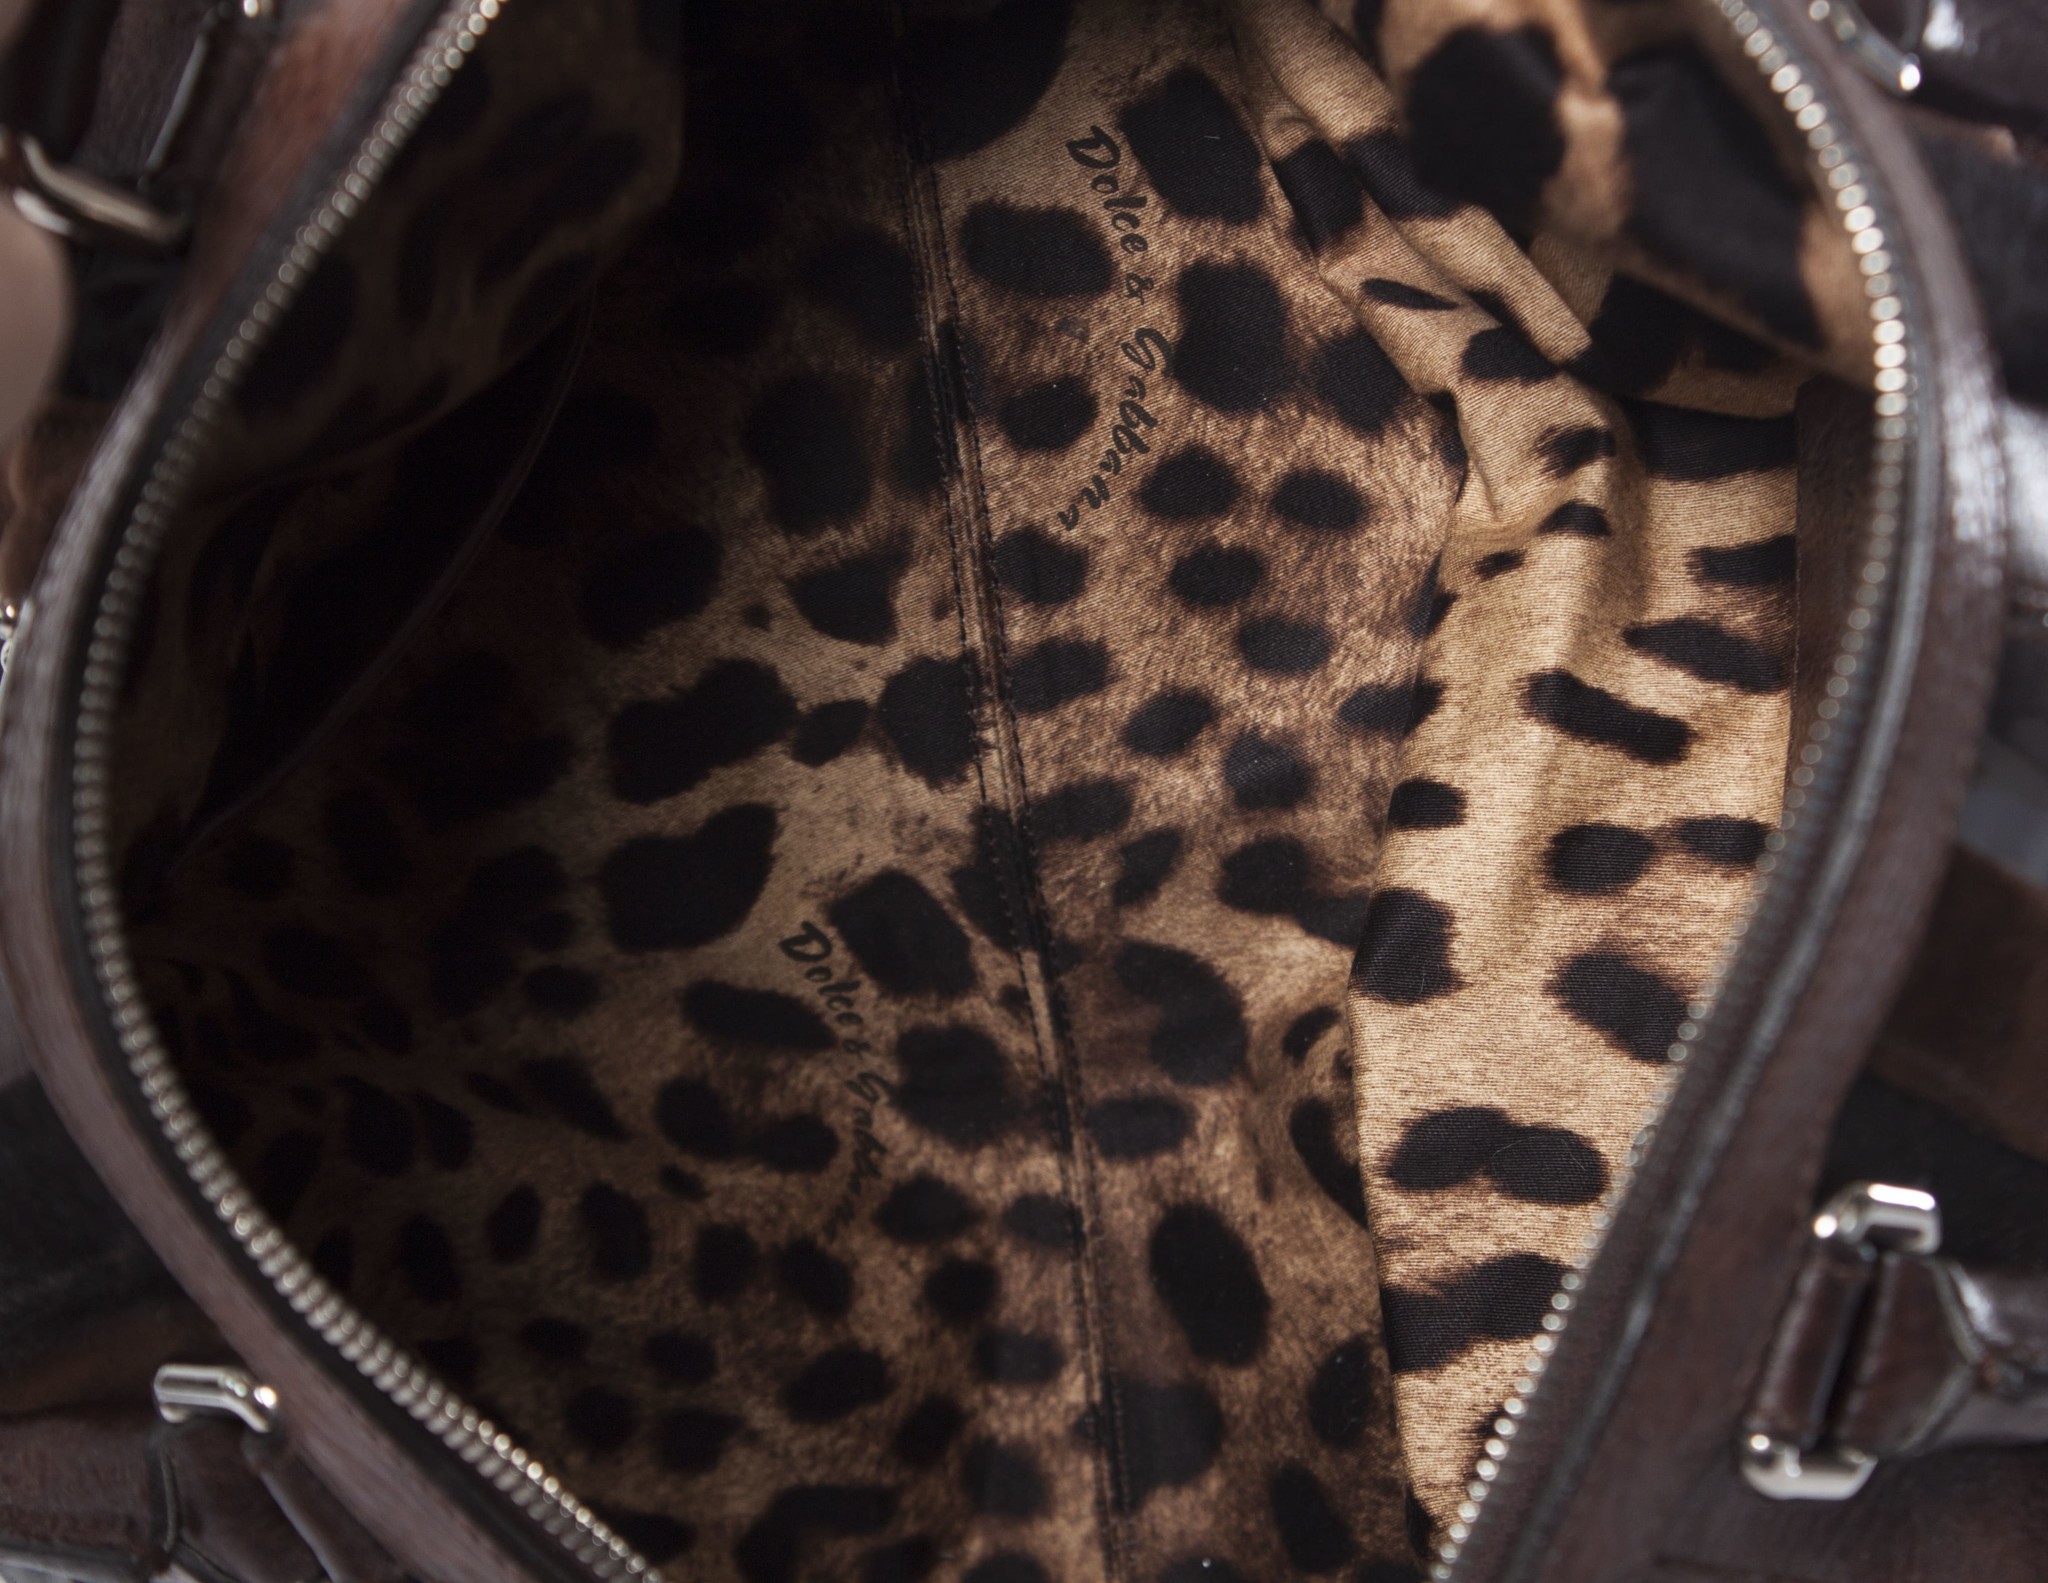 Dolce & Gabbana, brown handbag with stripes - Unique Designer Pieces